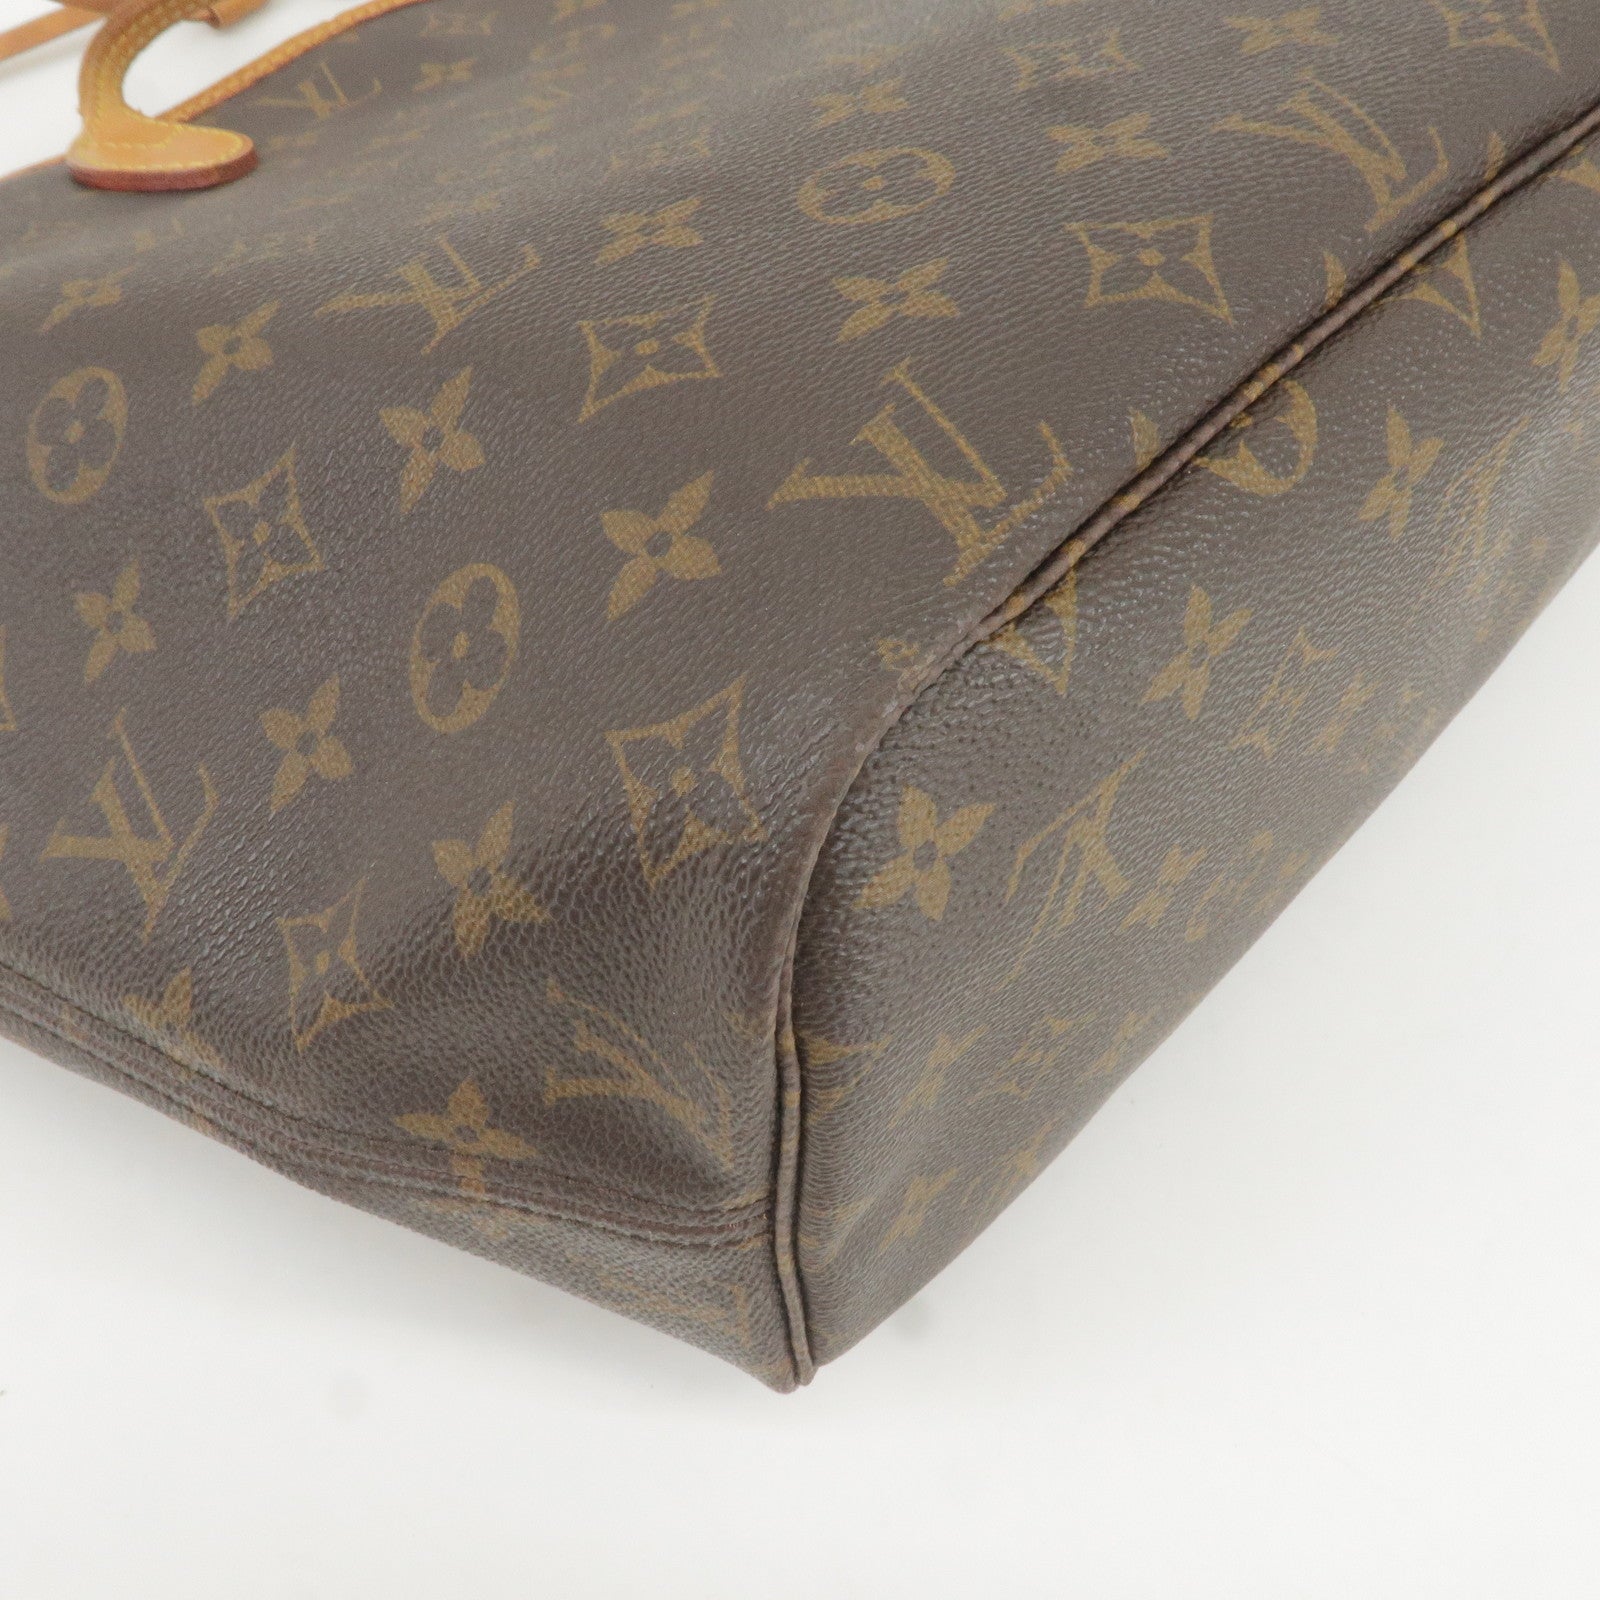 Pre-Owned Louis Vuitton Neo Noe Monogram Geant MM Shoulder Bag